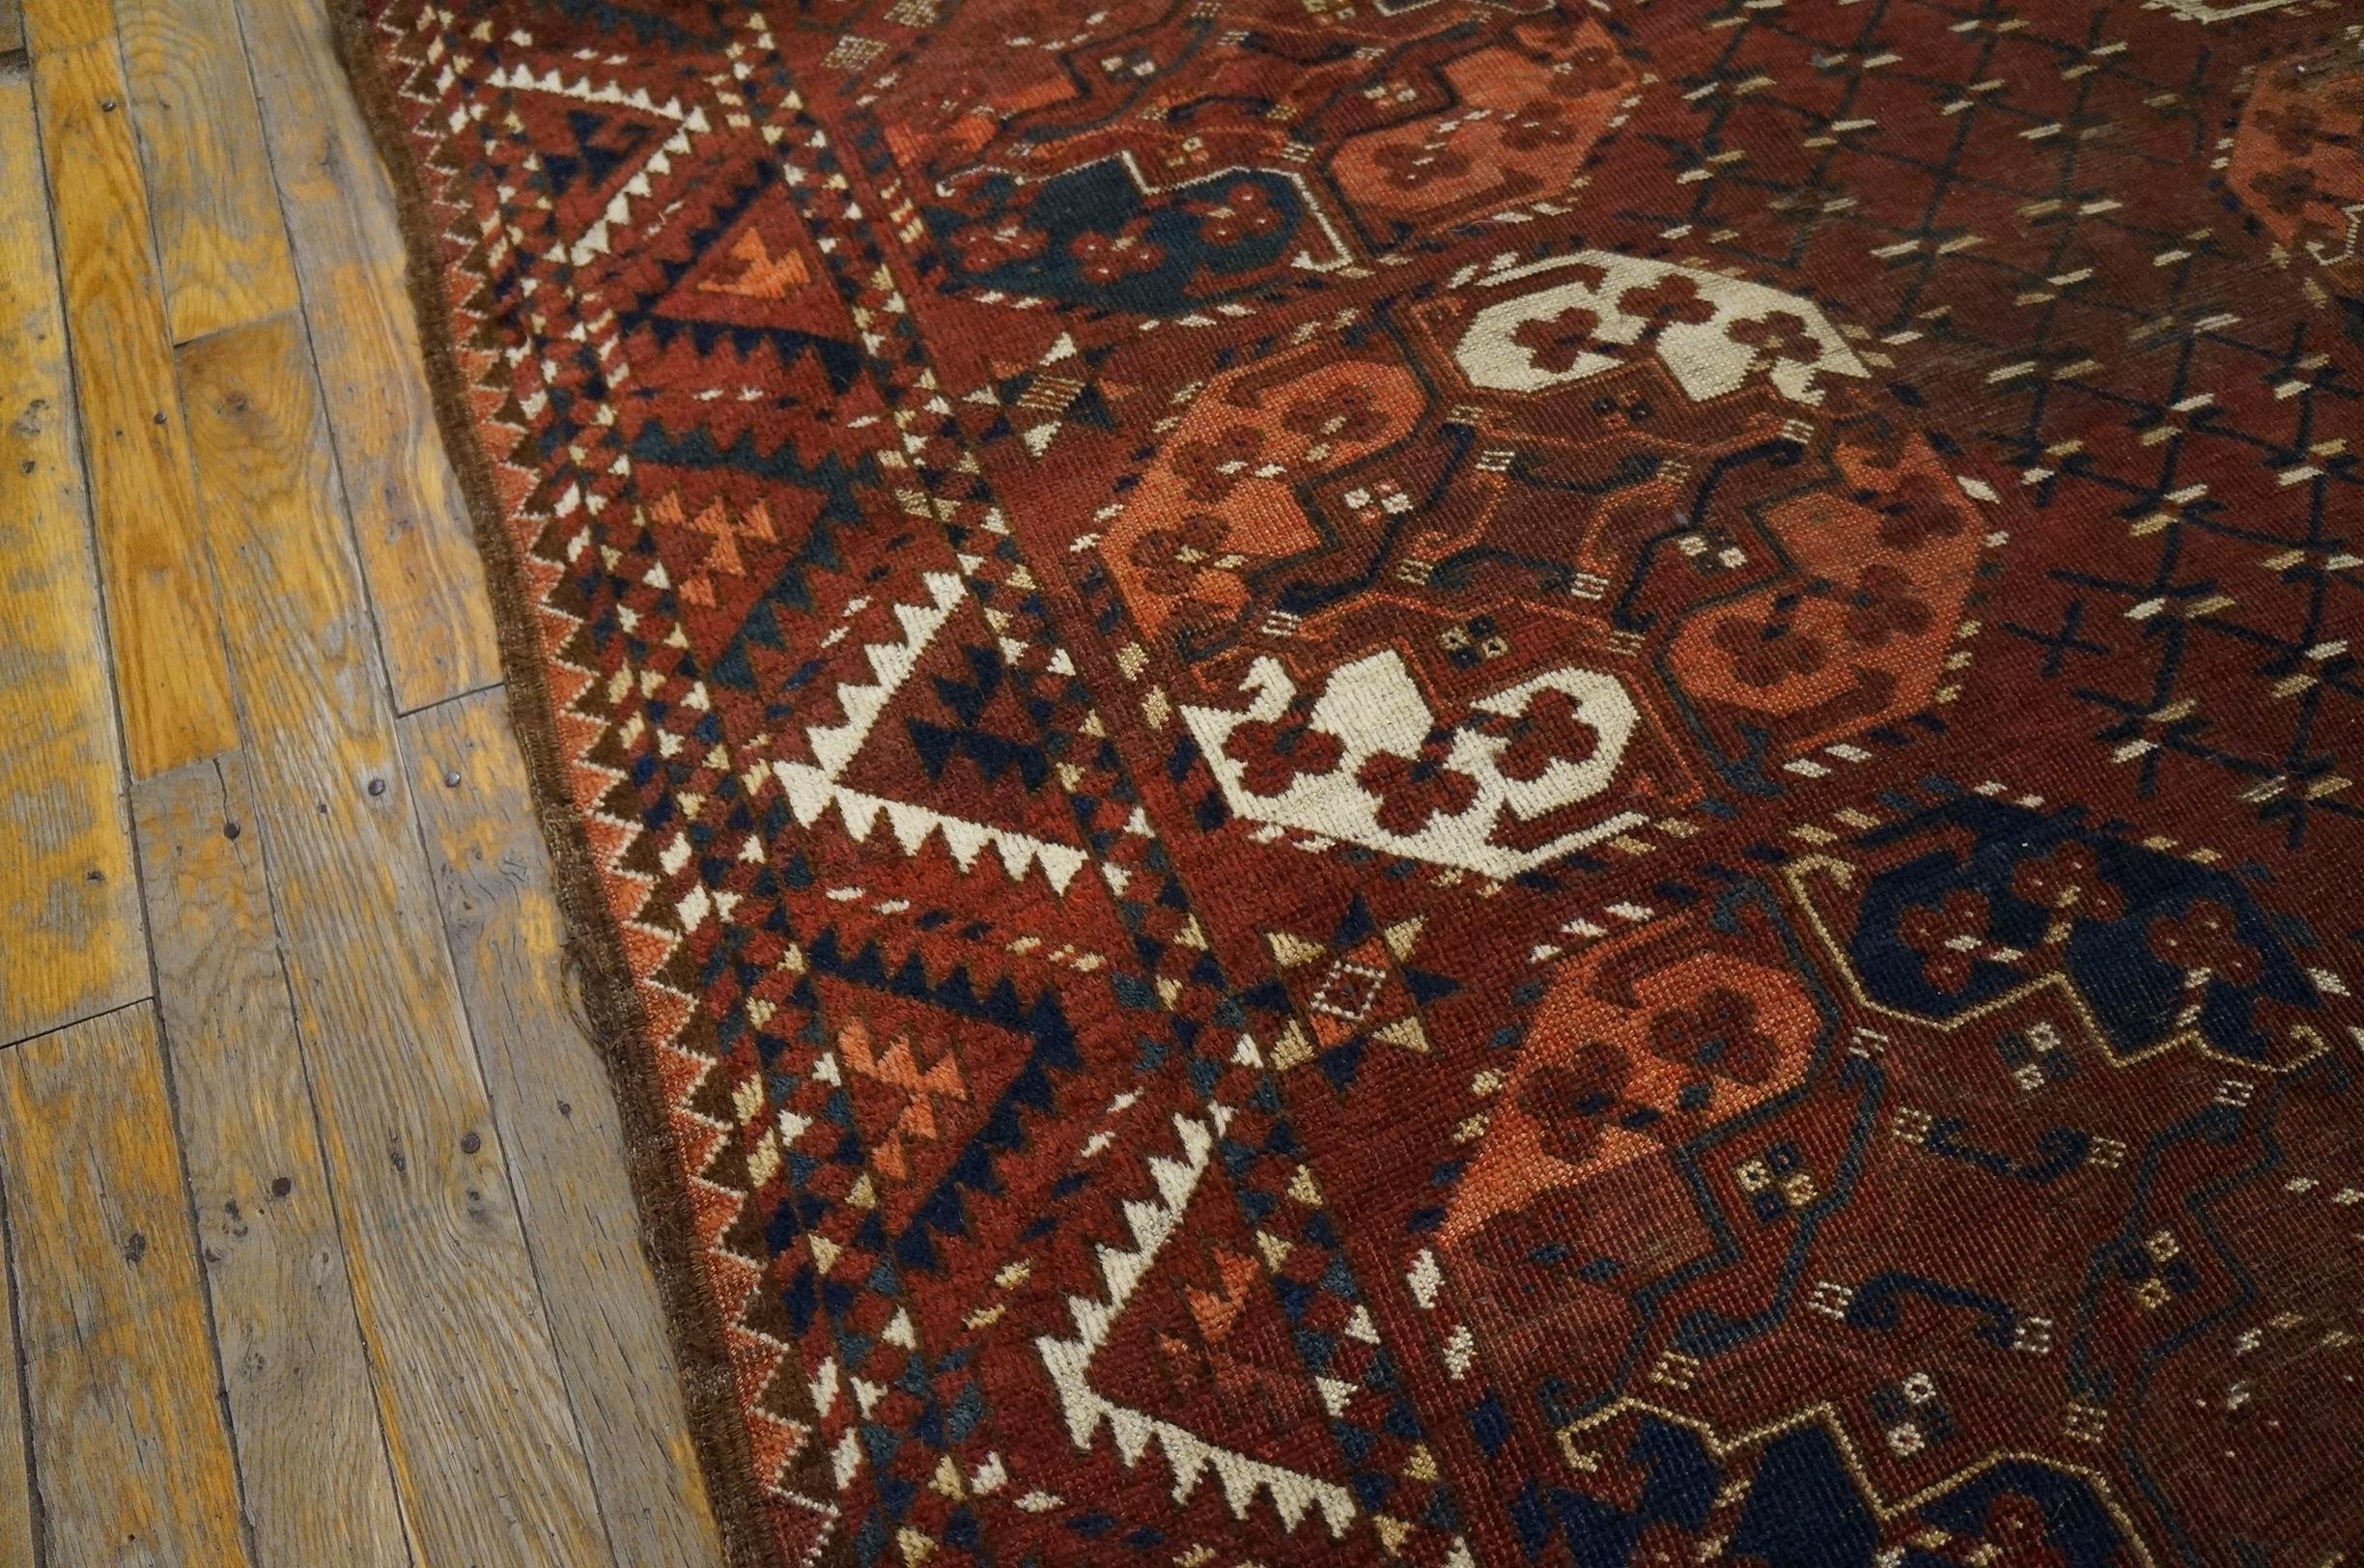 Mid 19th Century Central Asian Ersari - Beshir Main Carpet 
6'6